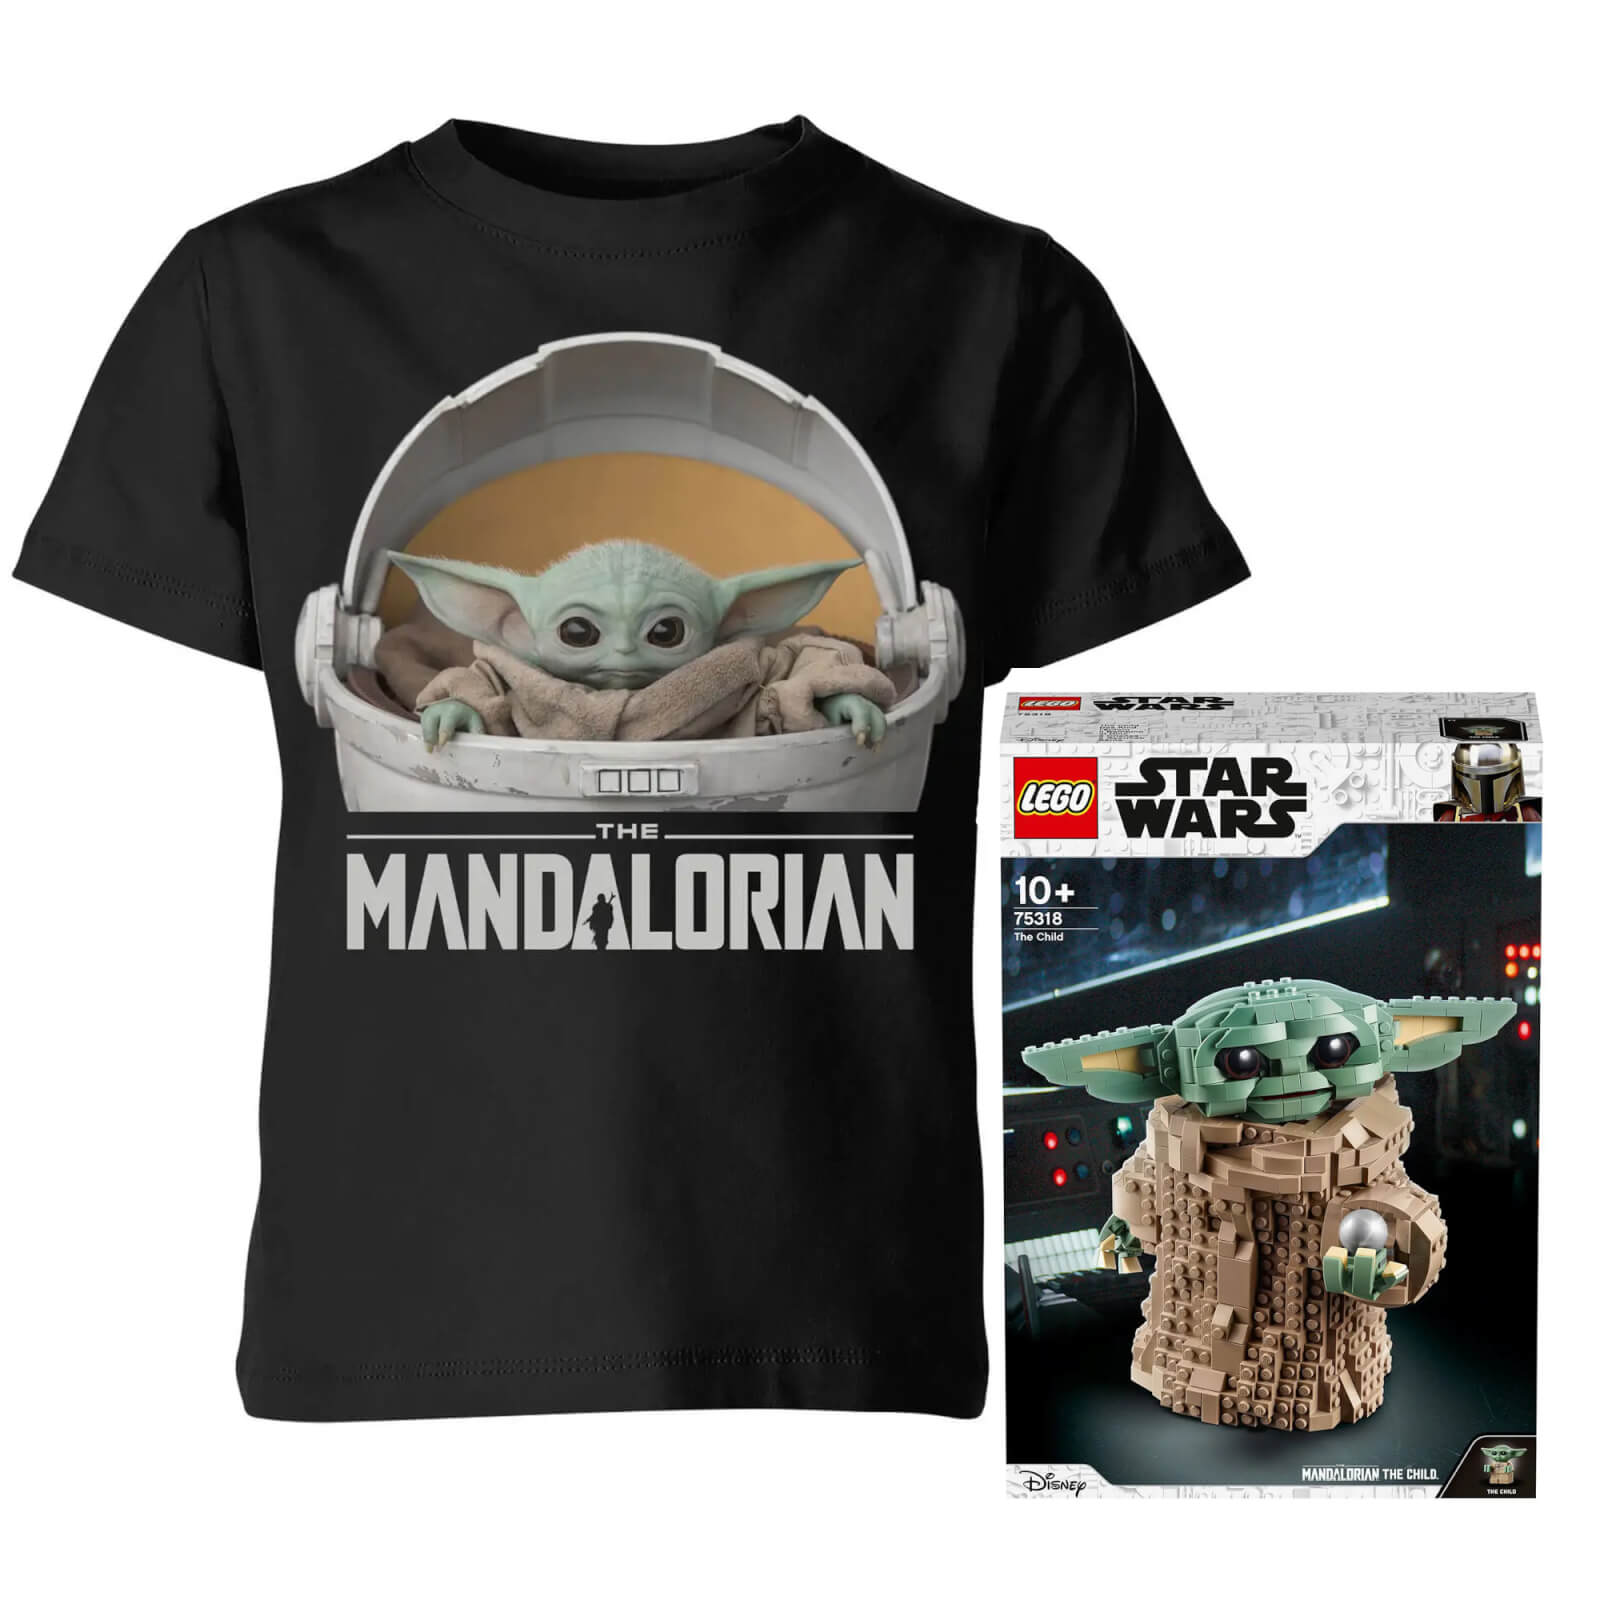 Official LEGO Star Wars: The Mandalorian The Child Building Set (75318) Kids T-Shirt Bundle - 5-6 Jahre von Original Hero